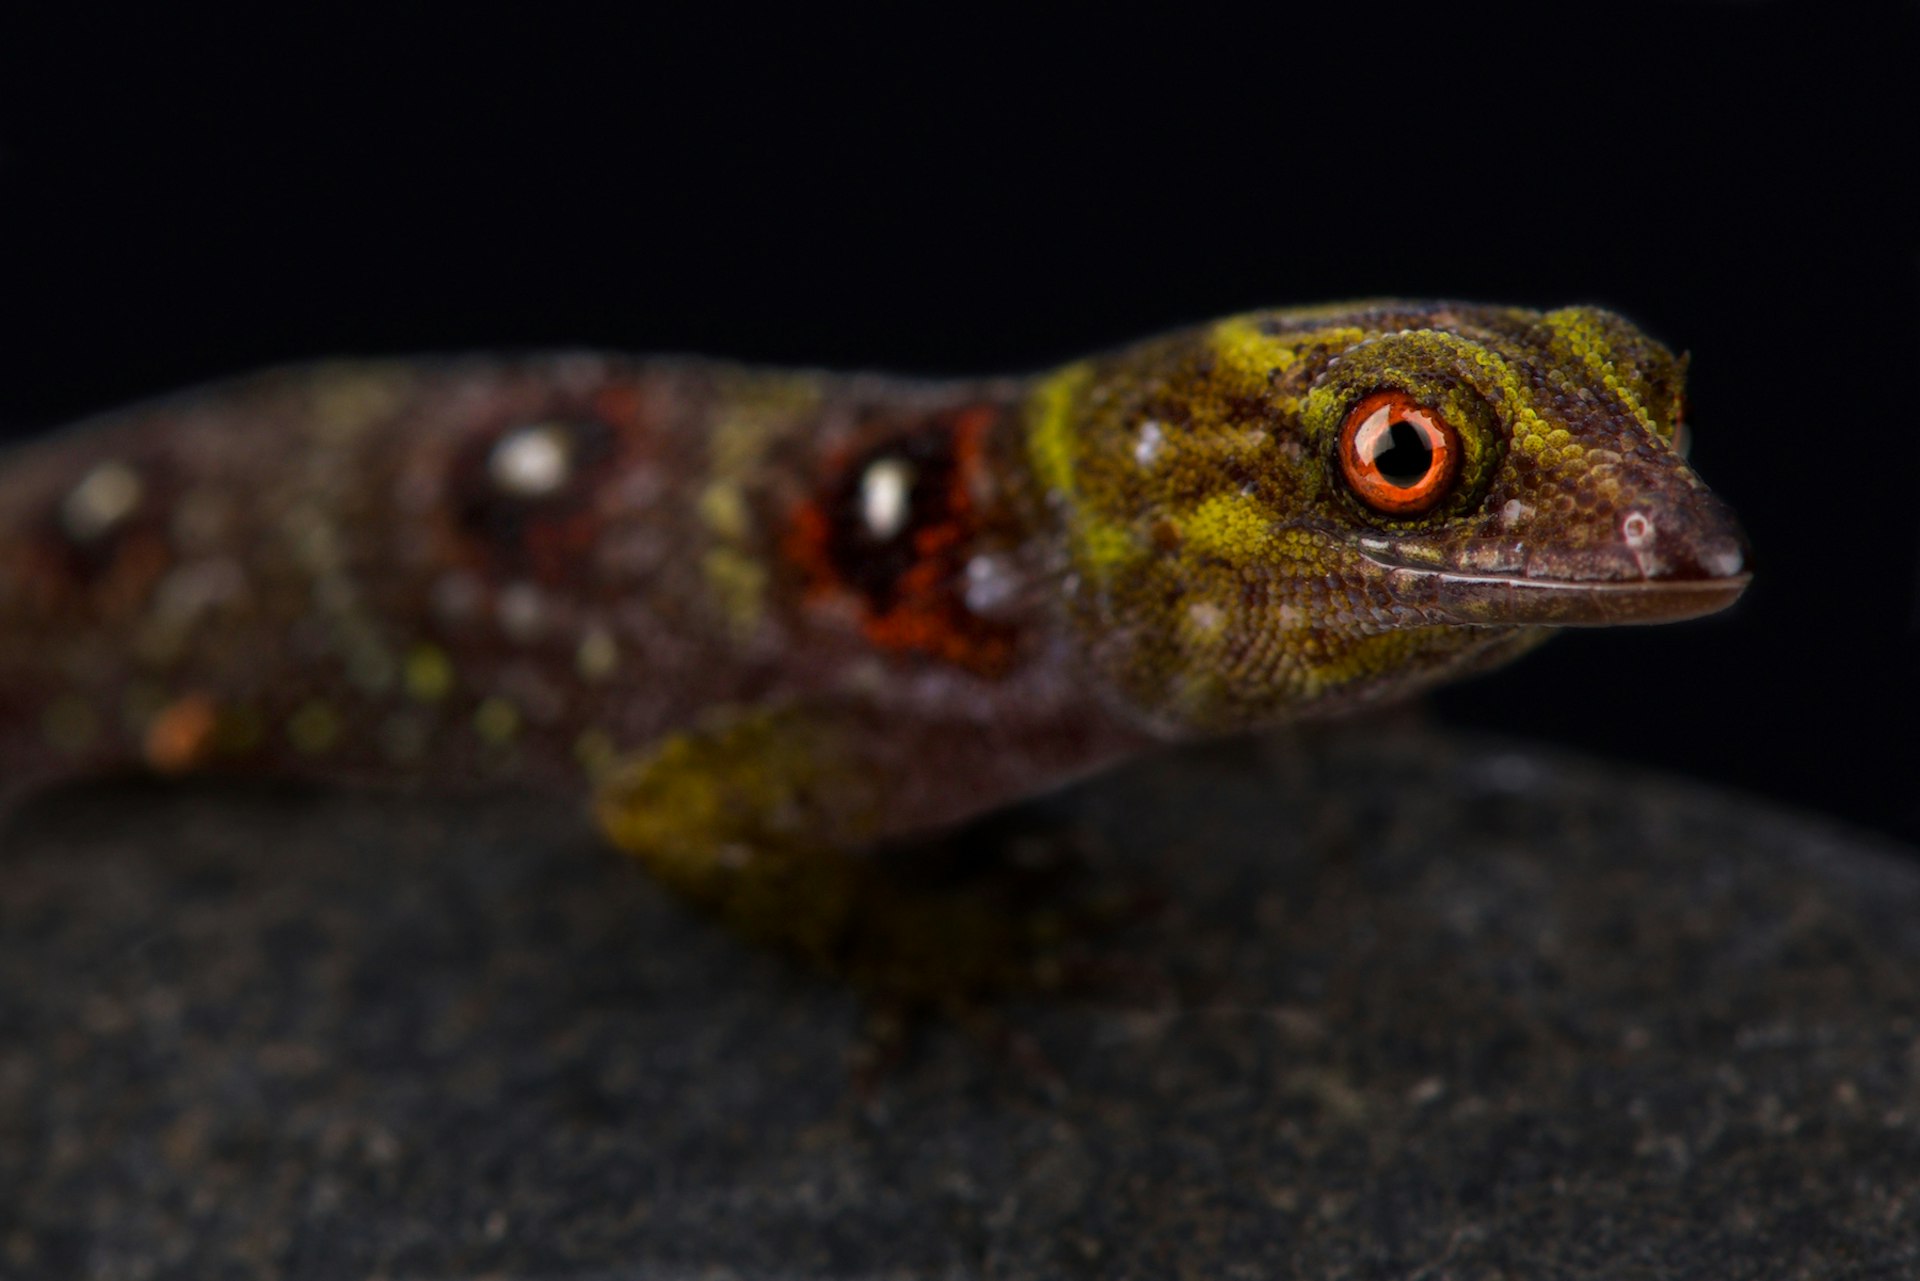 Close-up shot of a colorful Union Island gecko